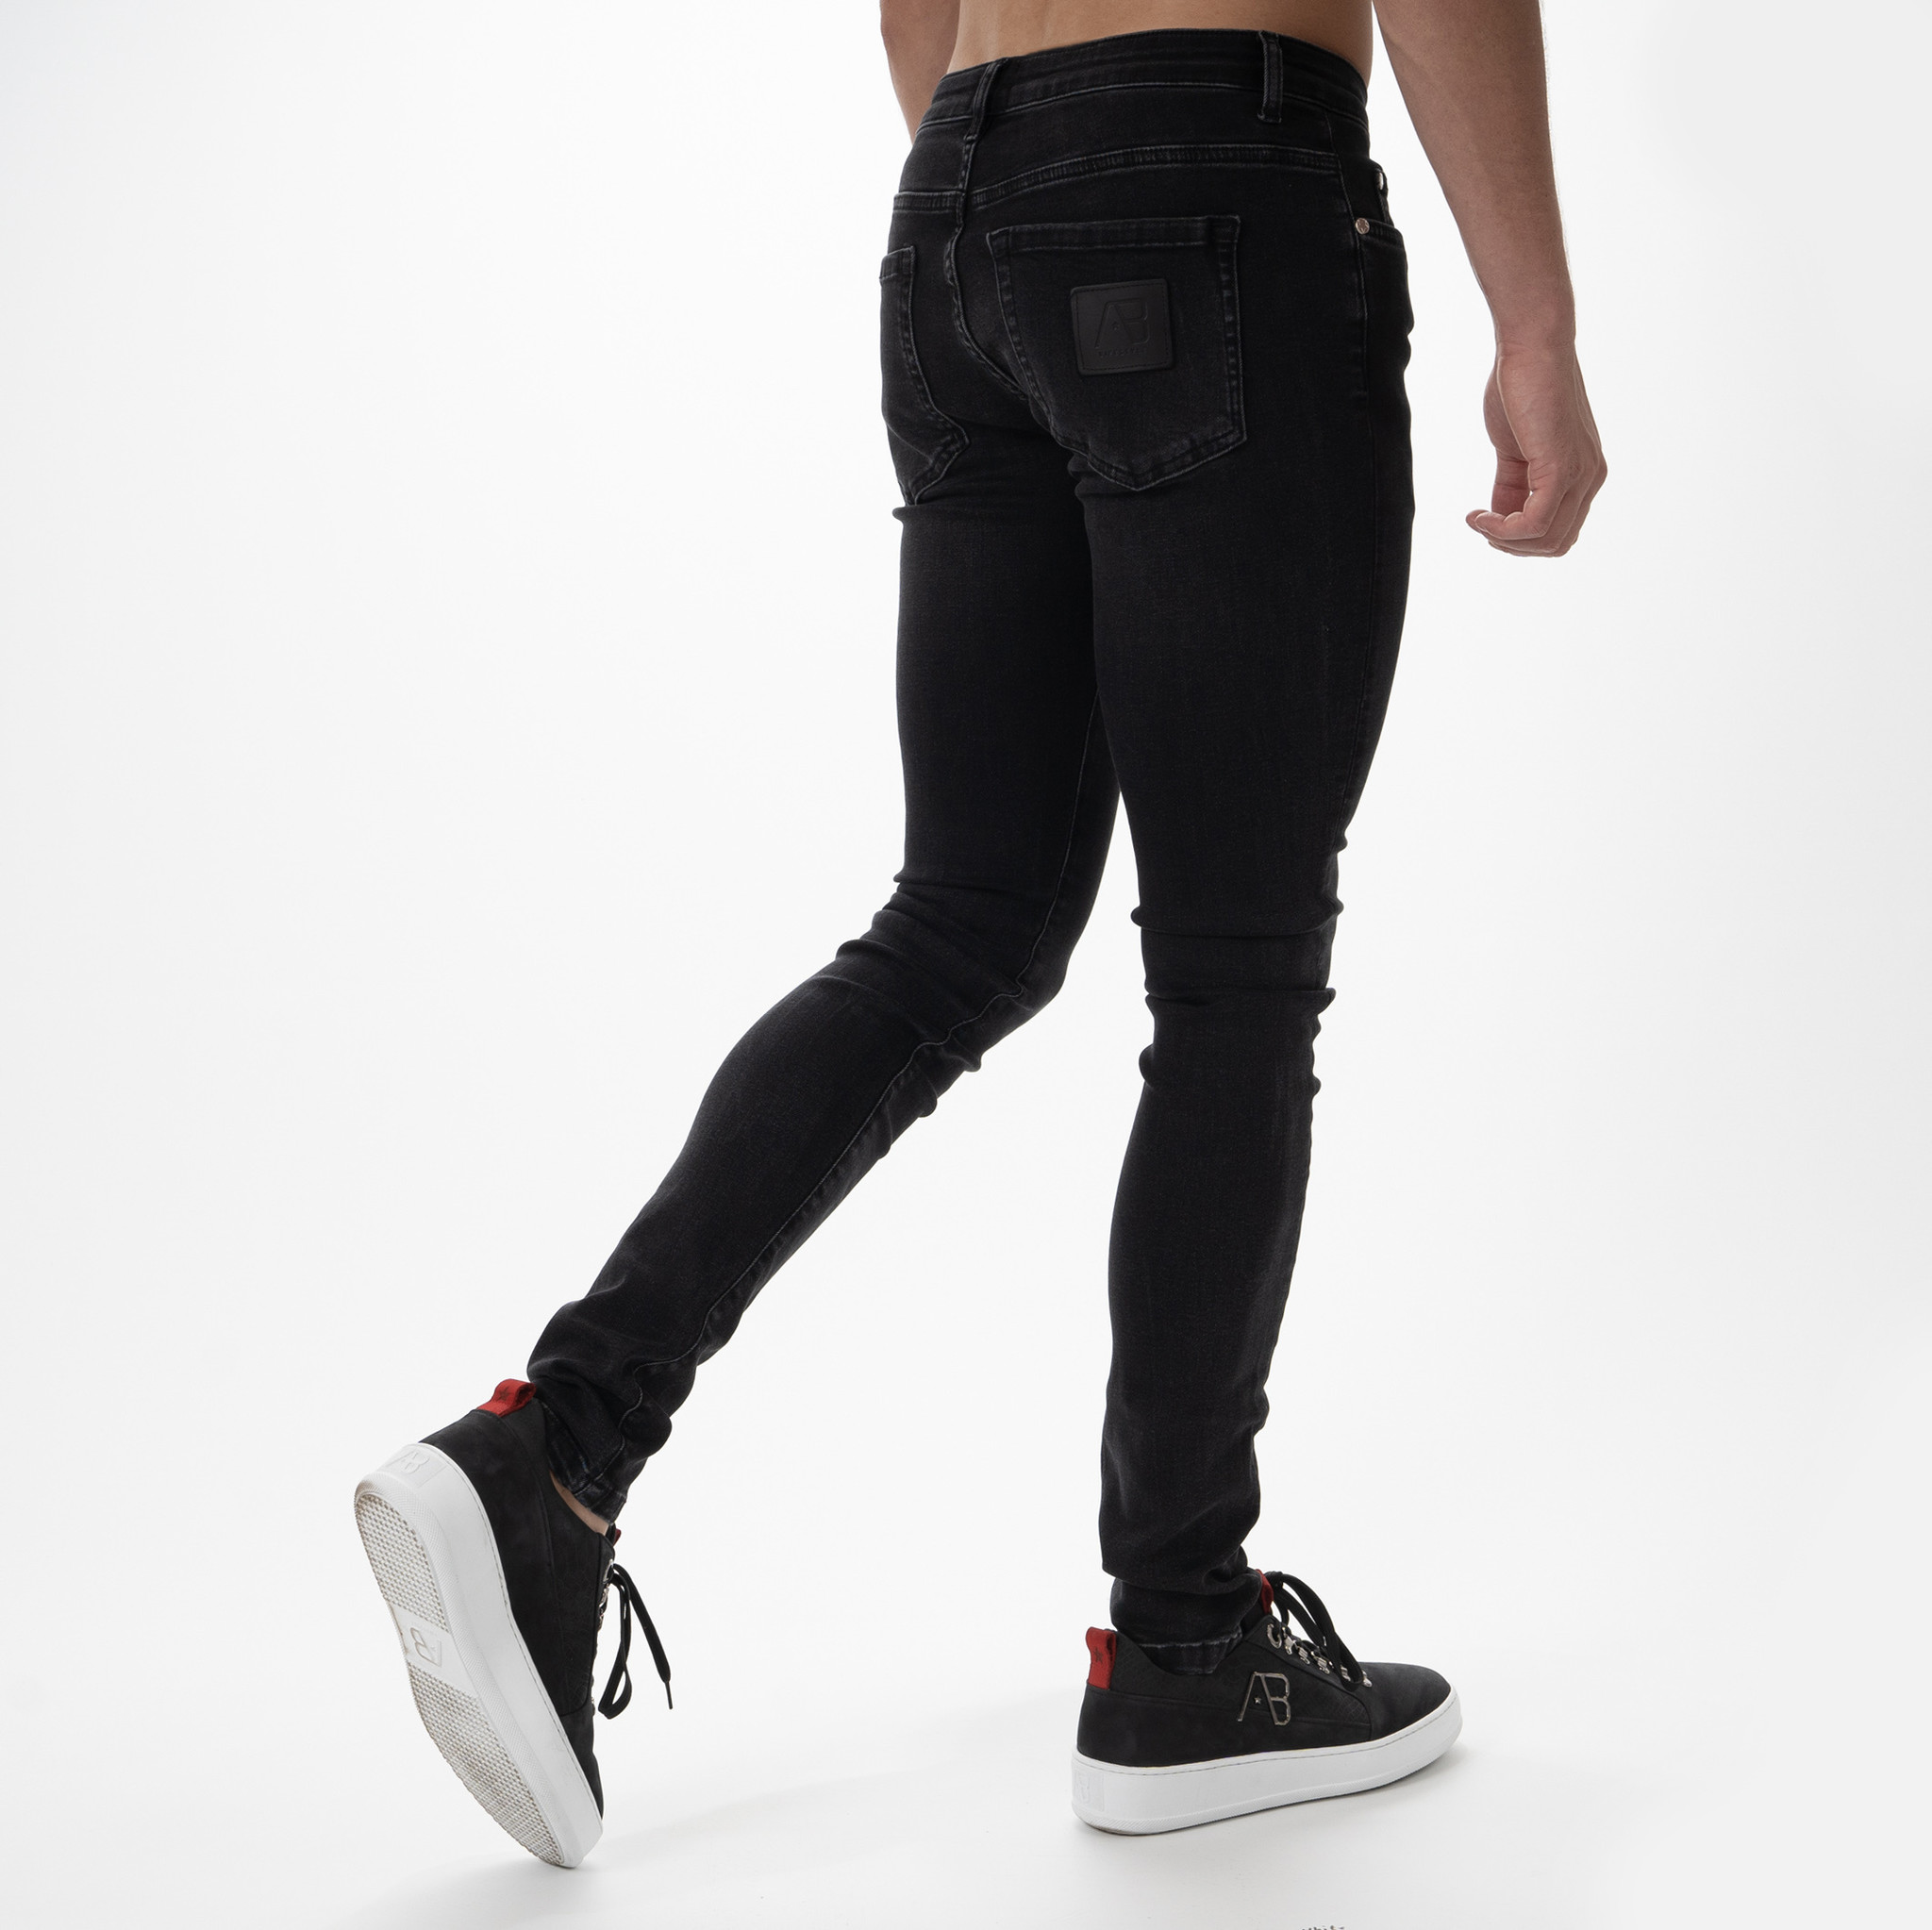 AB Lifestyle - Basic Stretch Jeans Black - Concept R